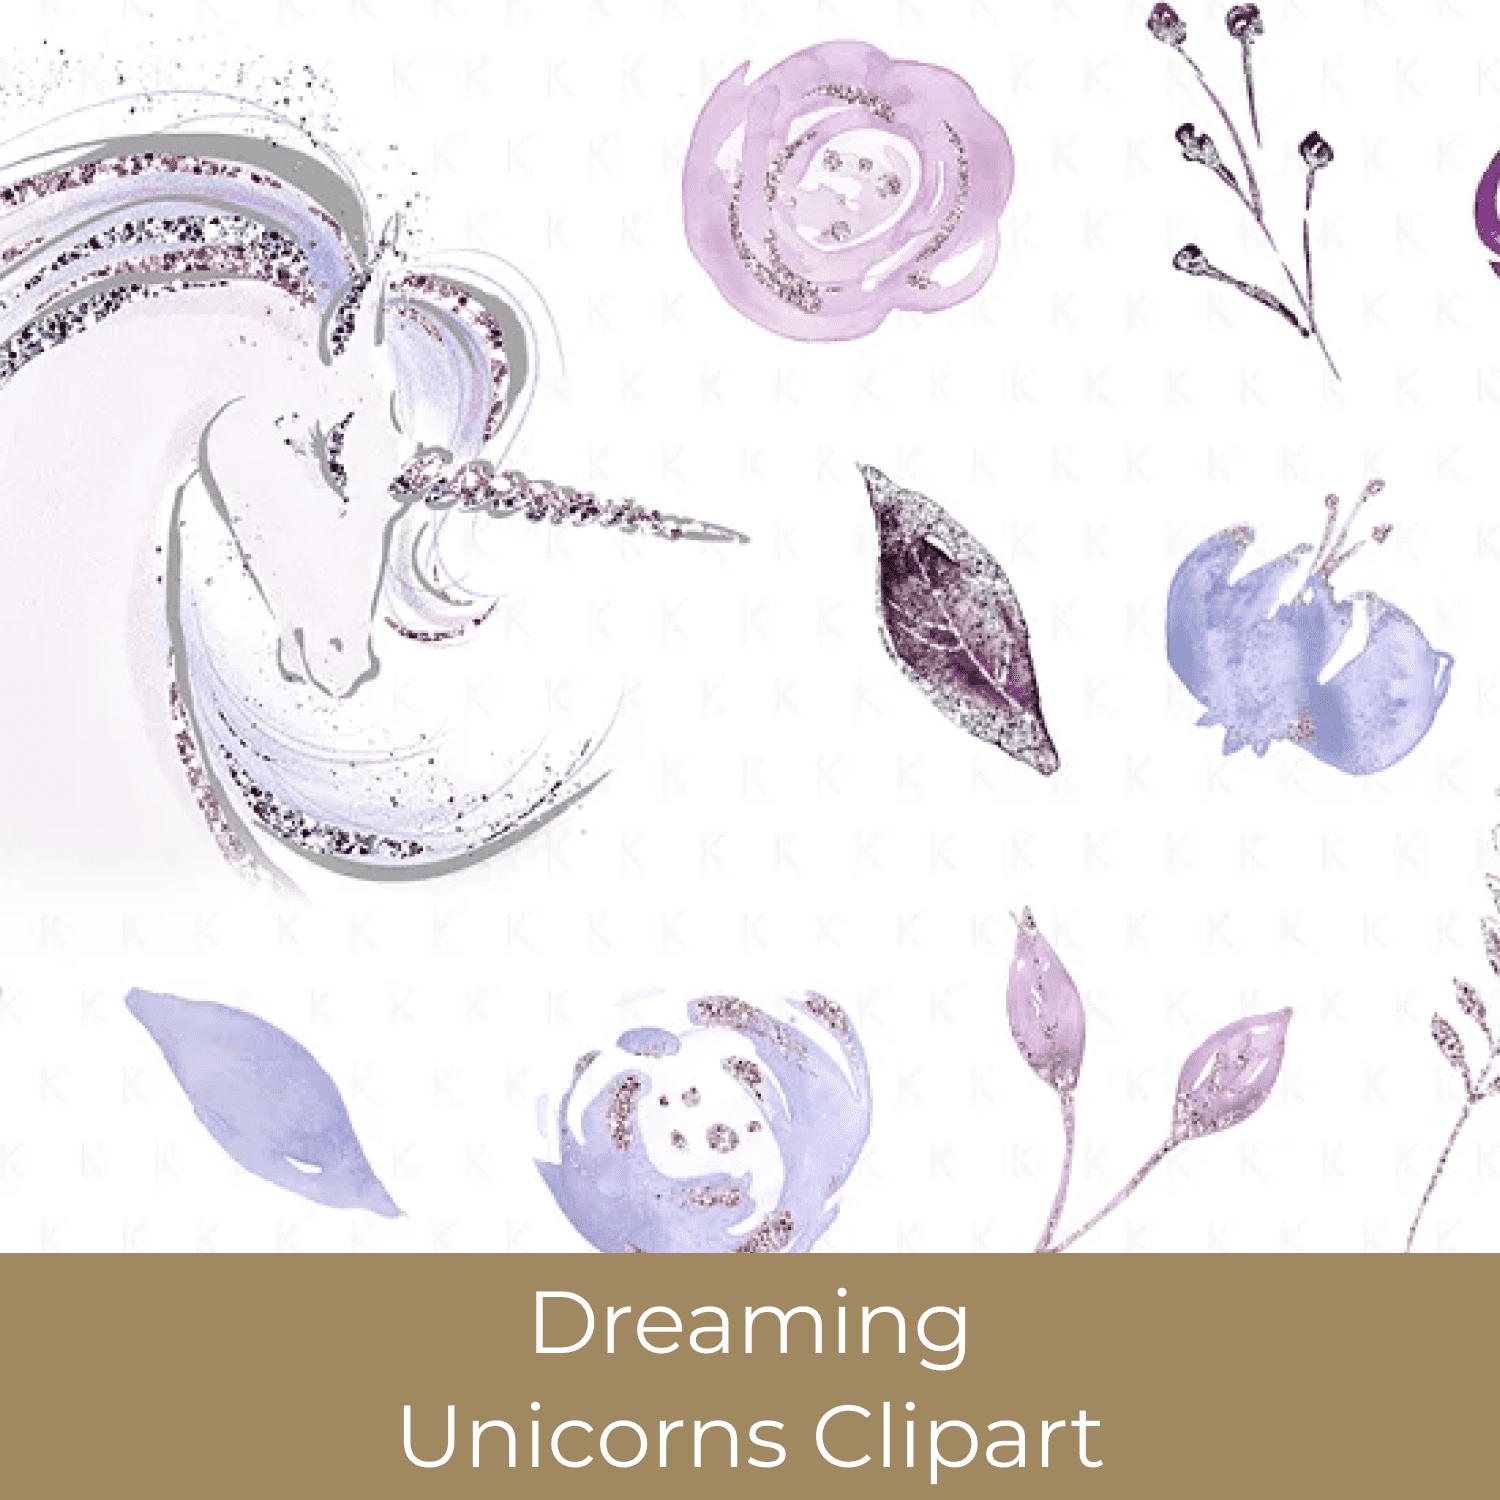 Dreaming Unicorns Clipart cover.